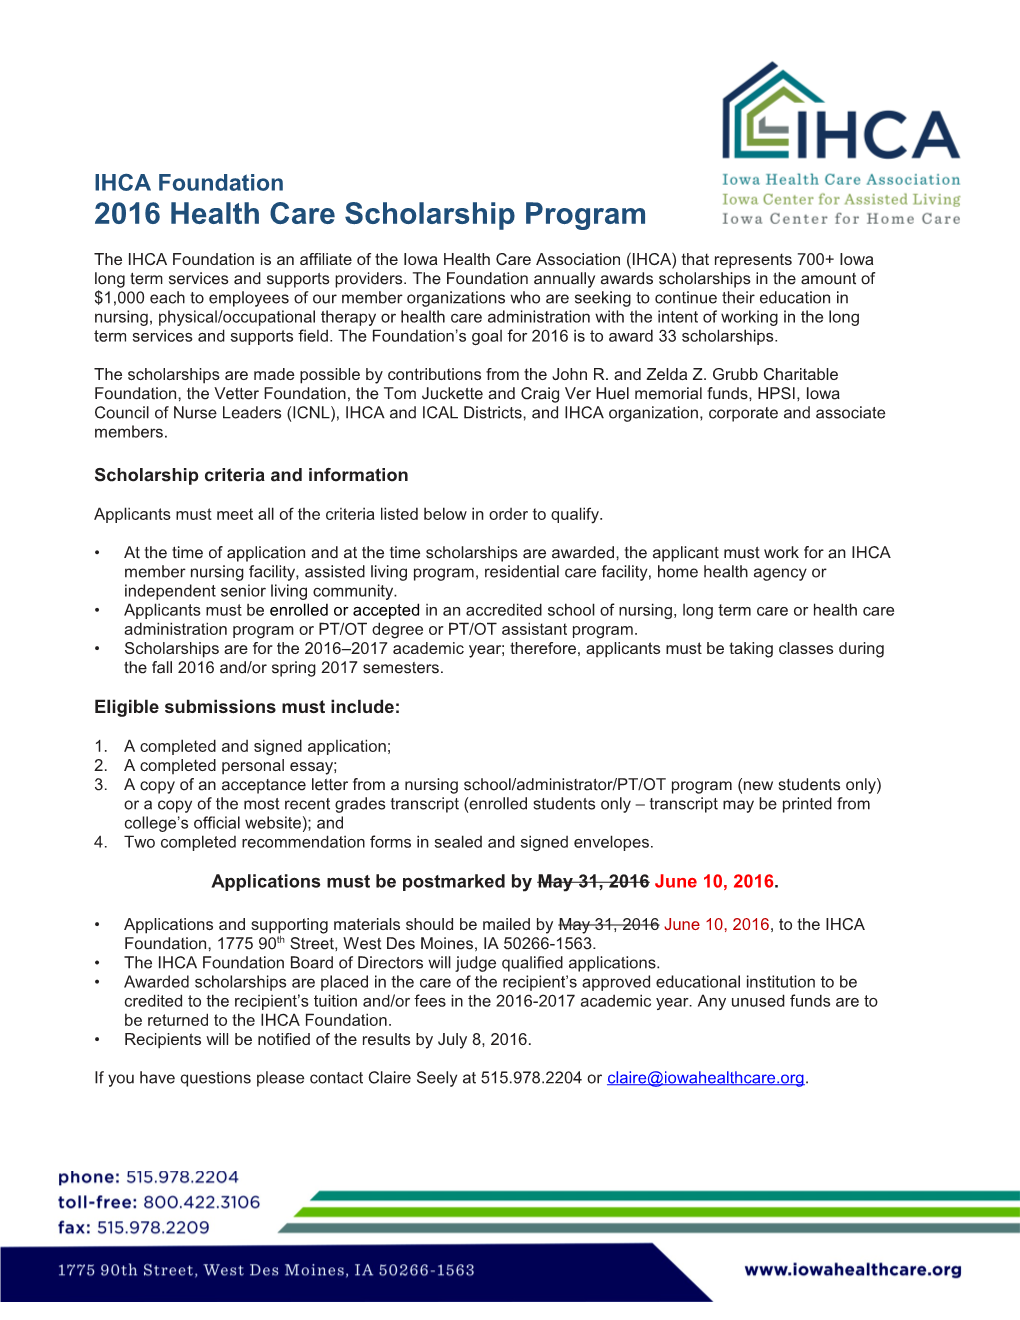 IHCA Foundation 2010 Scholarship Program